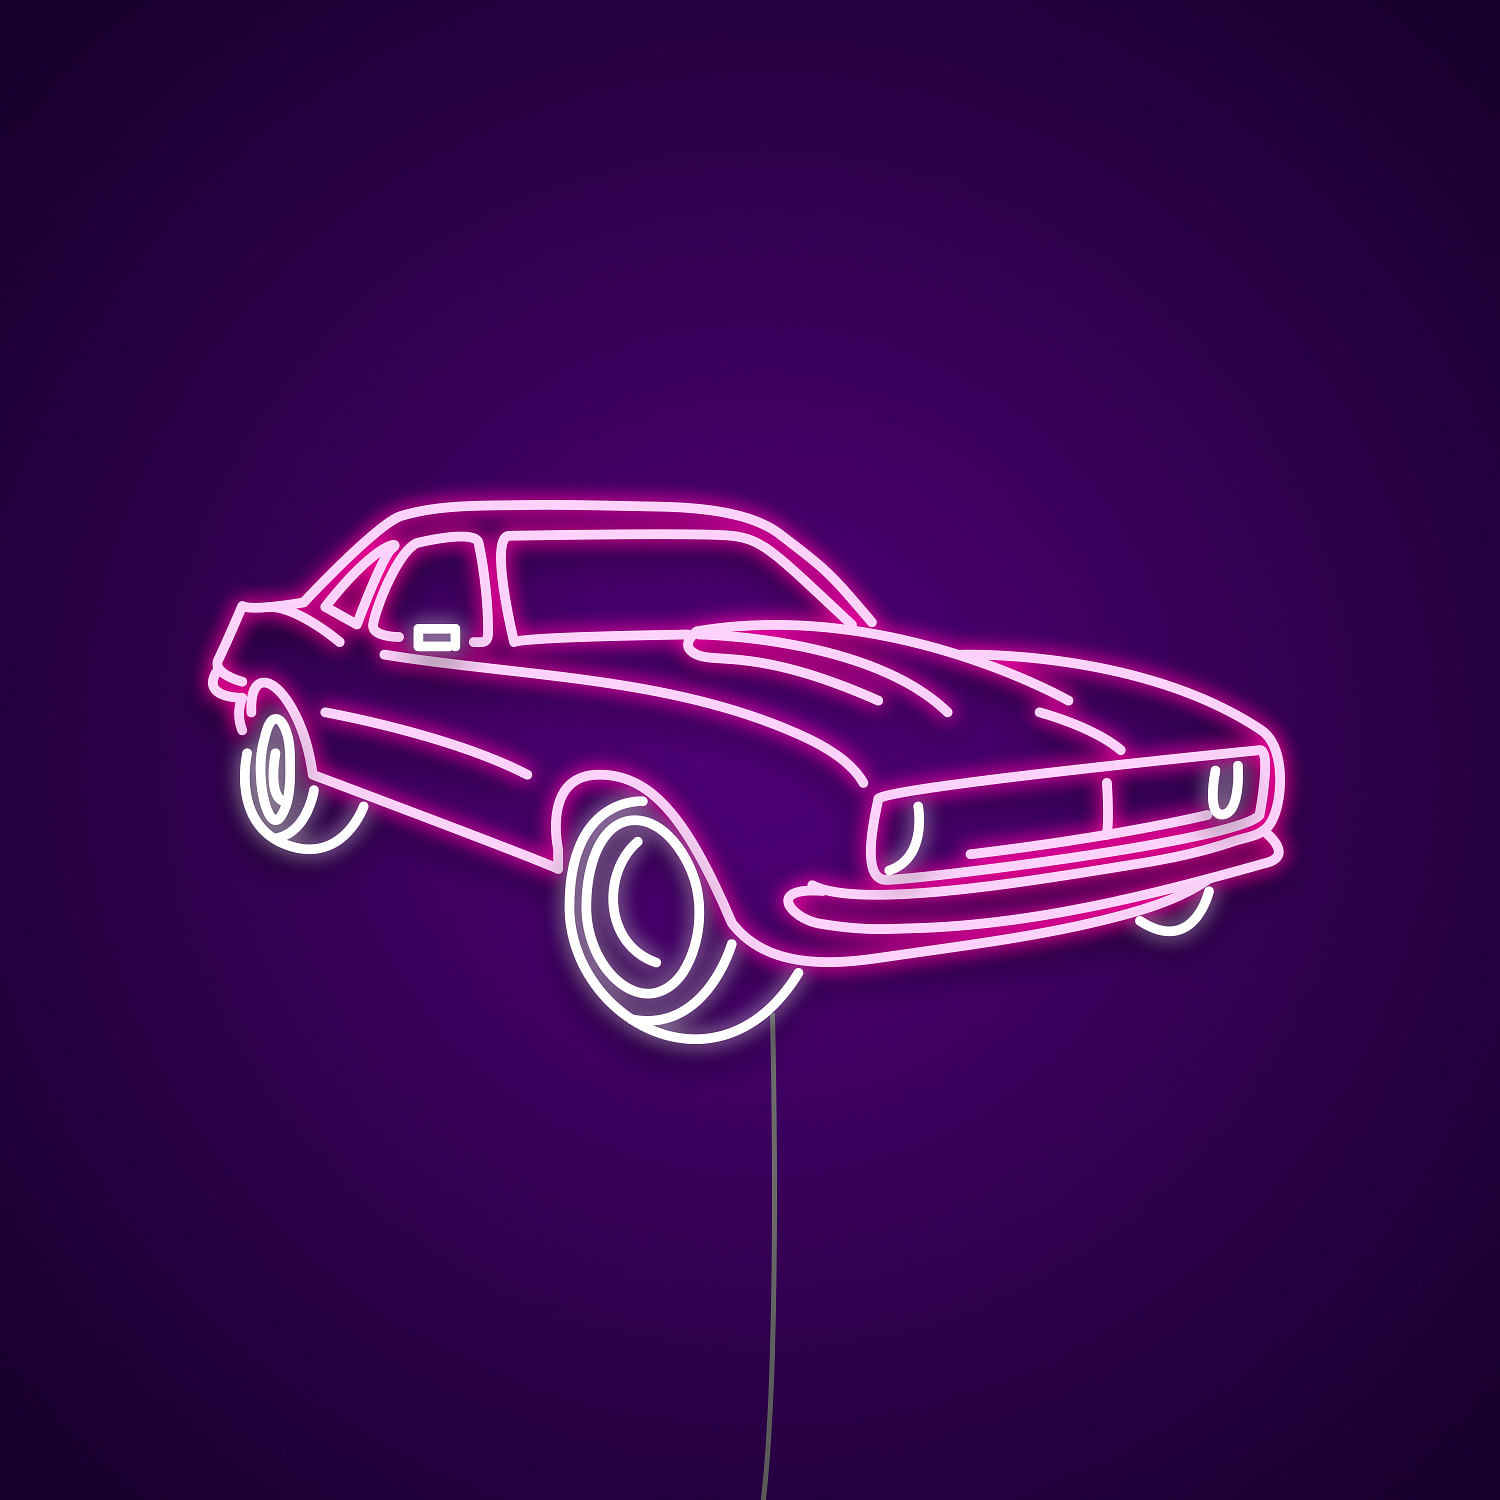 https://neonize.gumlet.io/wp-content/uploads/2022/08/Mustang-Car-Neon-Light-Sign-Neonize.jpg